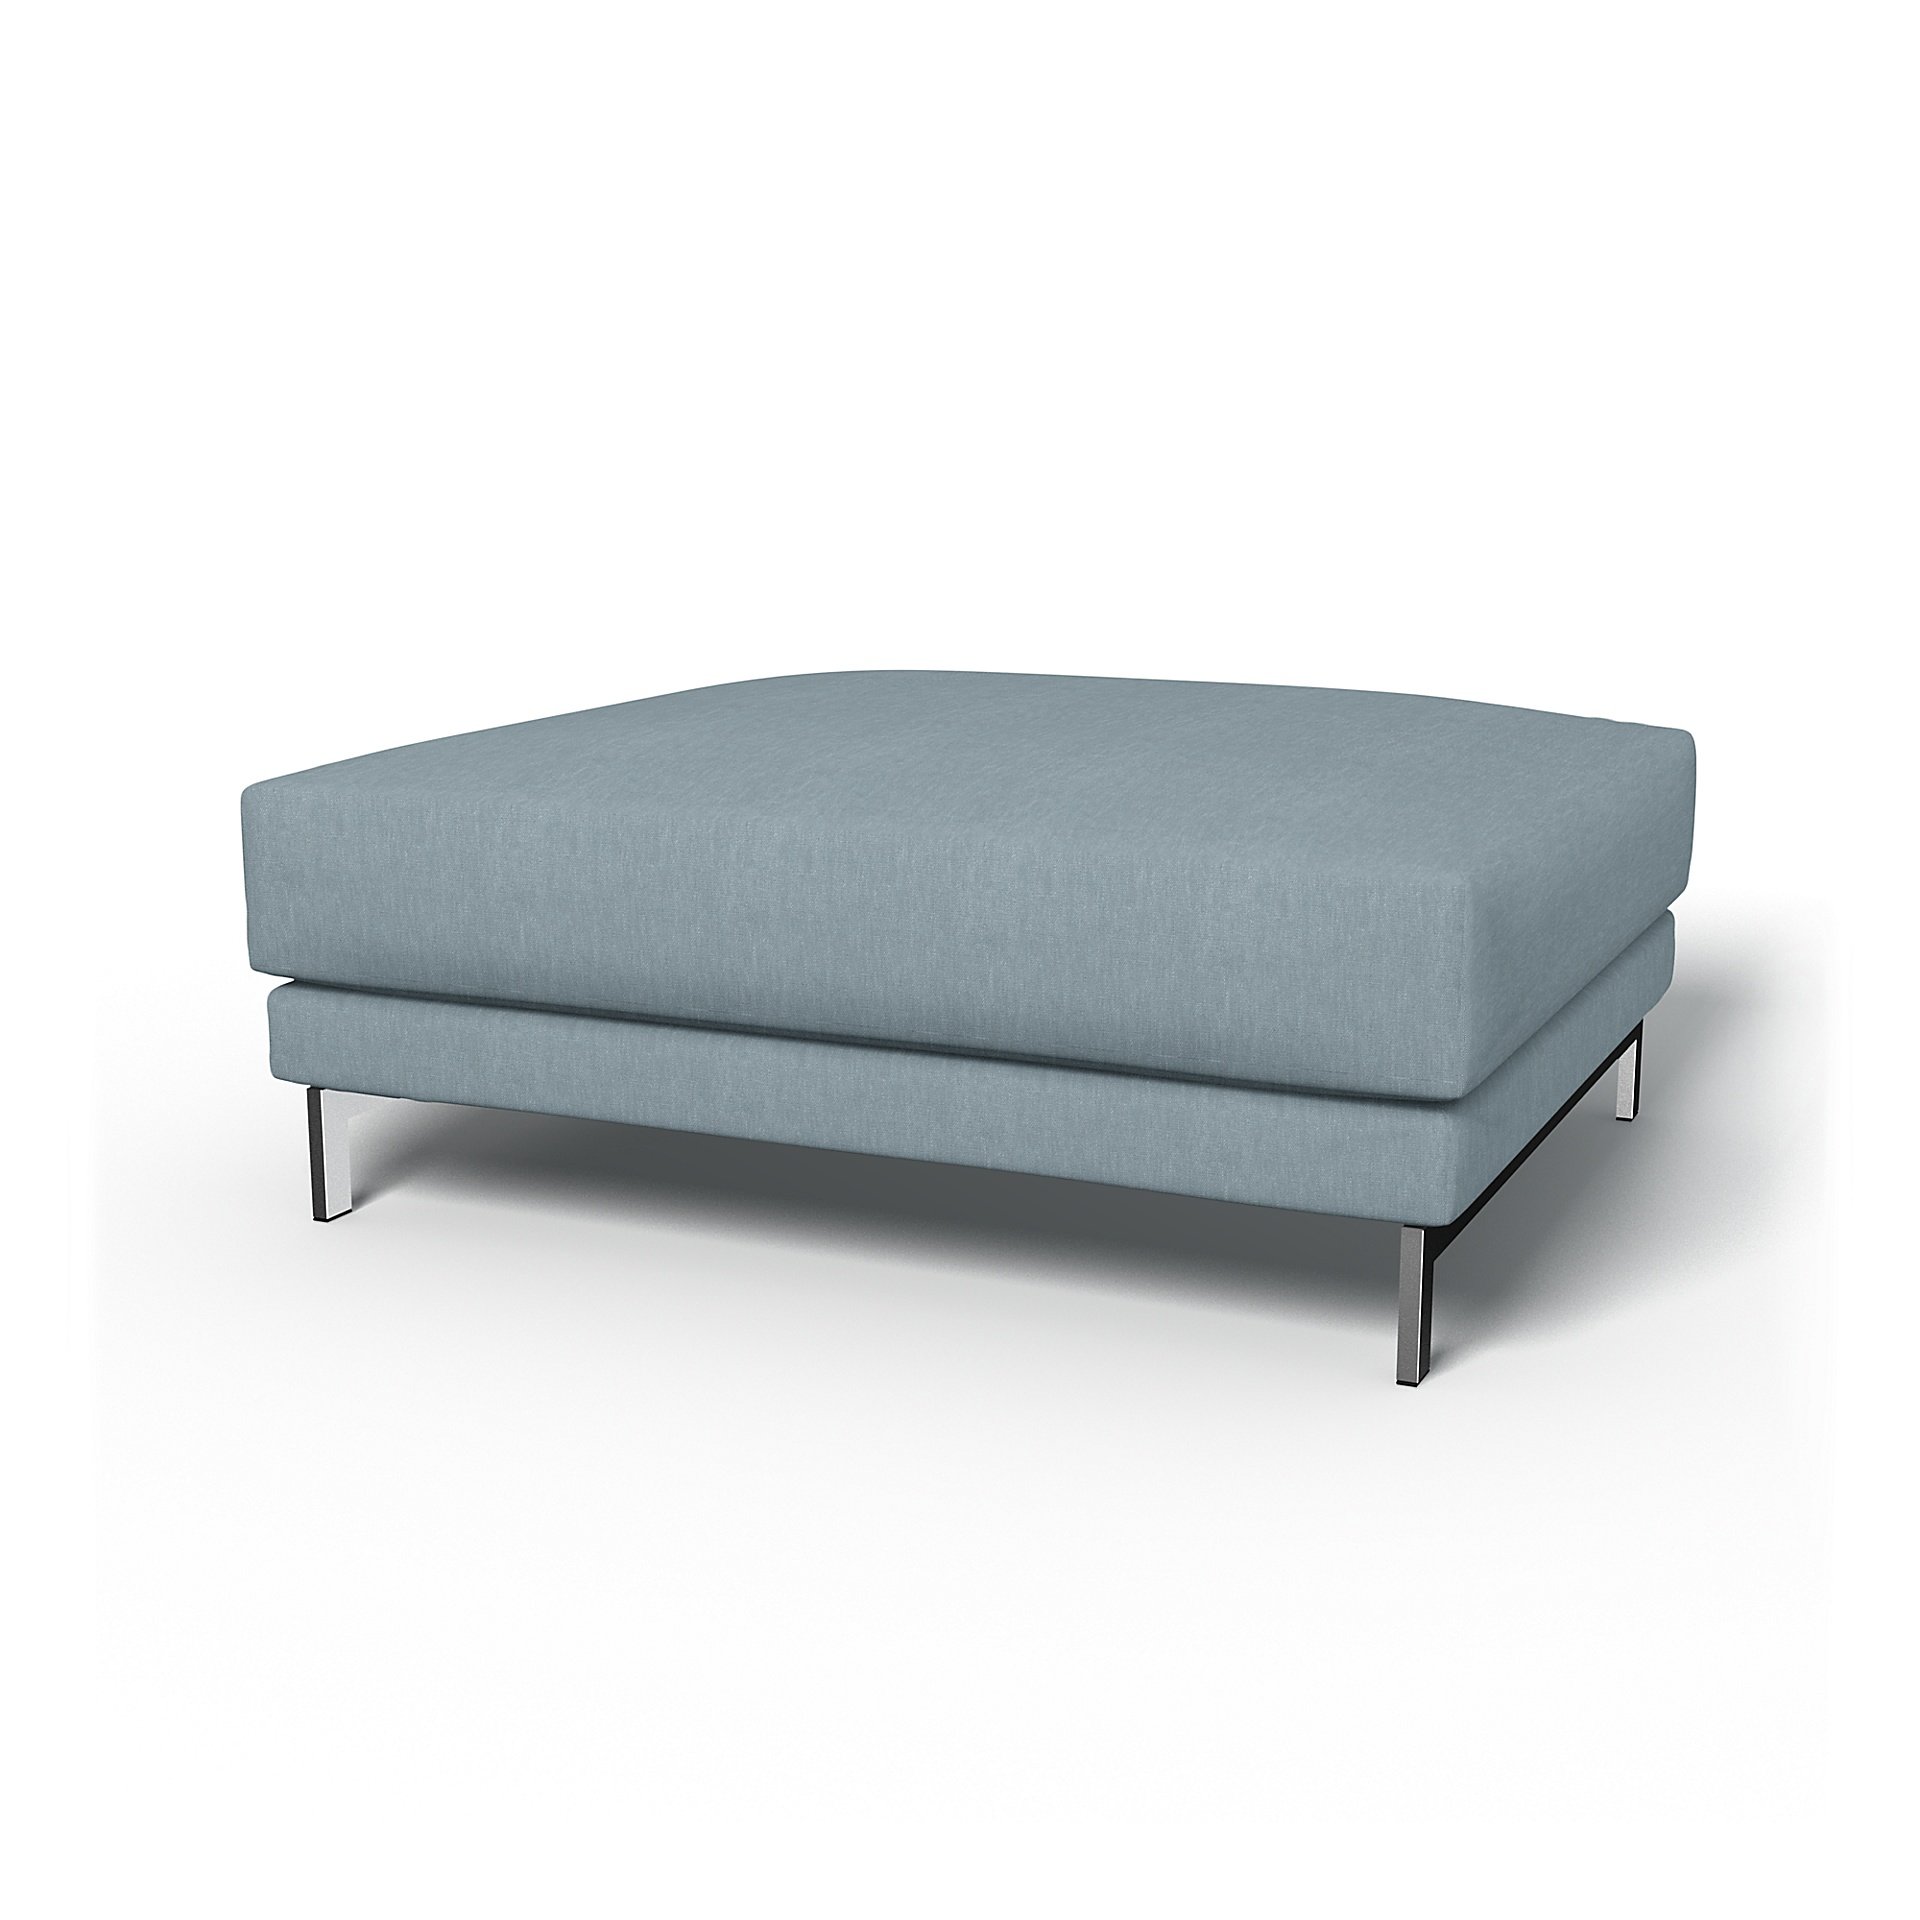 IKEA - Nockeby Footstool Cover, Dusty Blue, Linen - Bemz